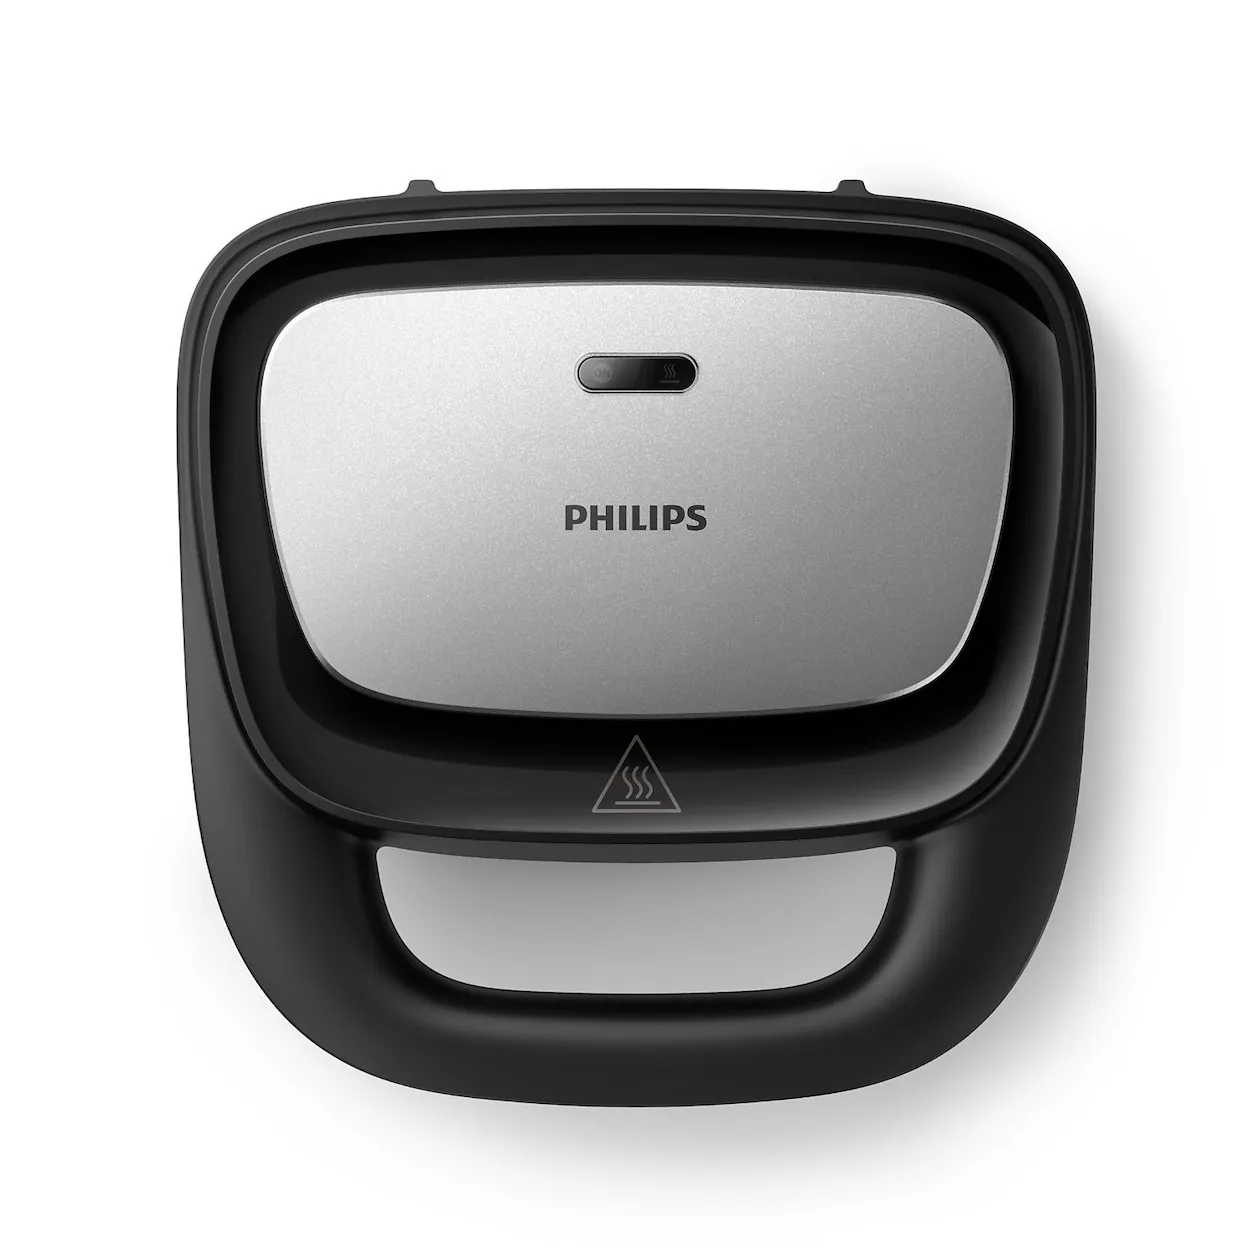 Philips HD2350/80